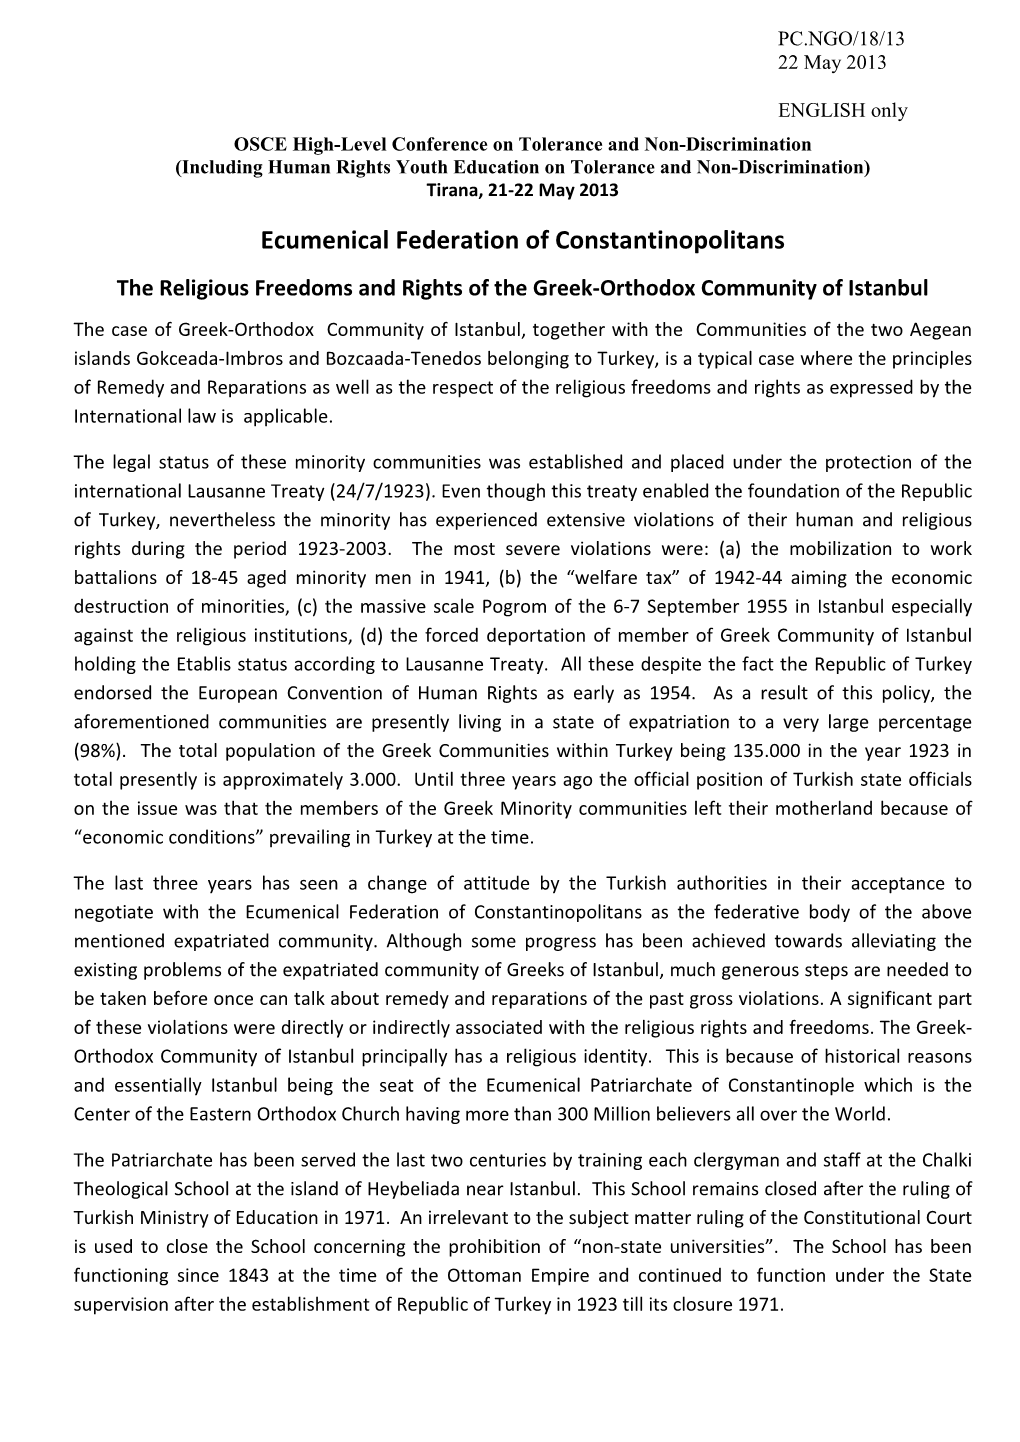 Ecumenical Federation of Constantinopolitans